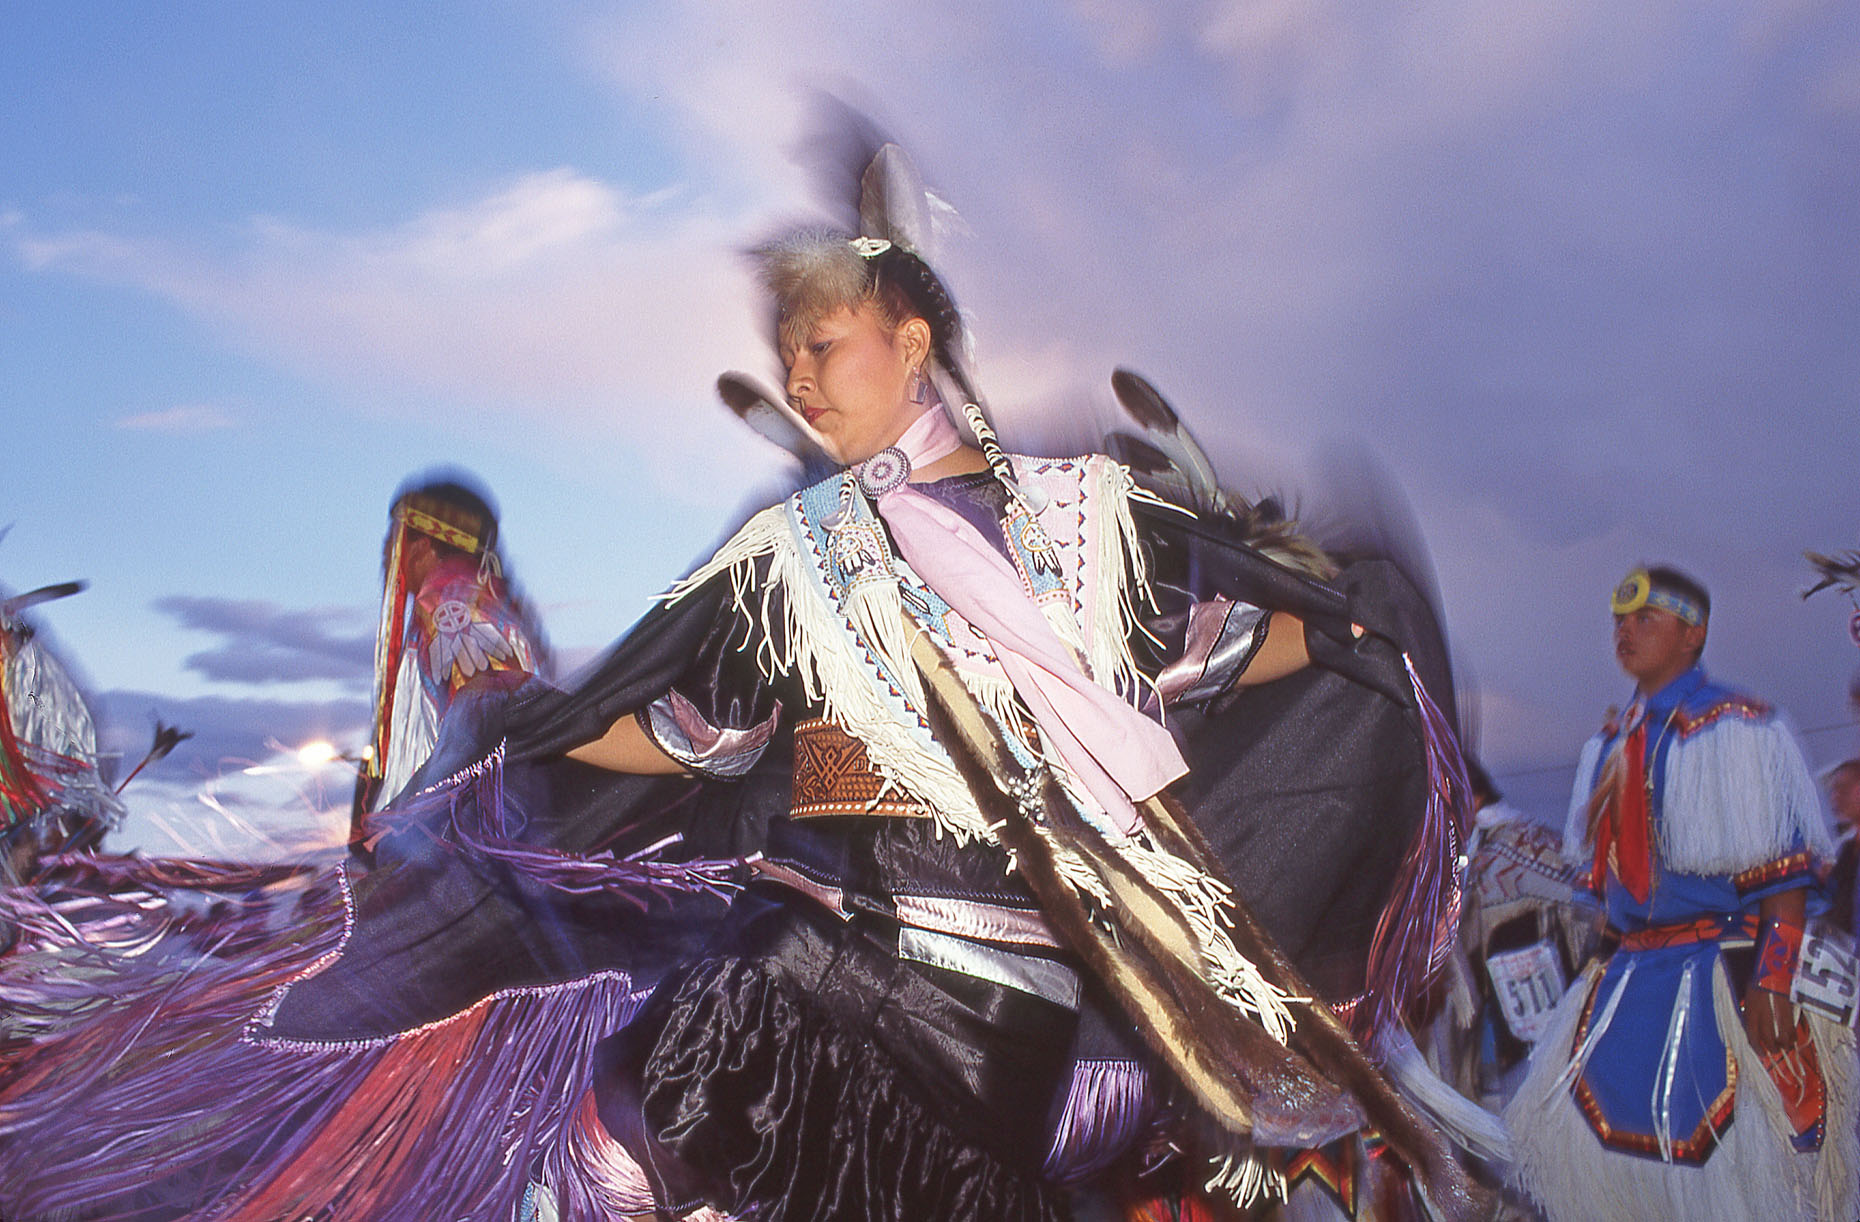 Pow Wow Shawl Dancer, John Annerino, Native American dance